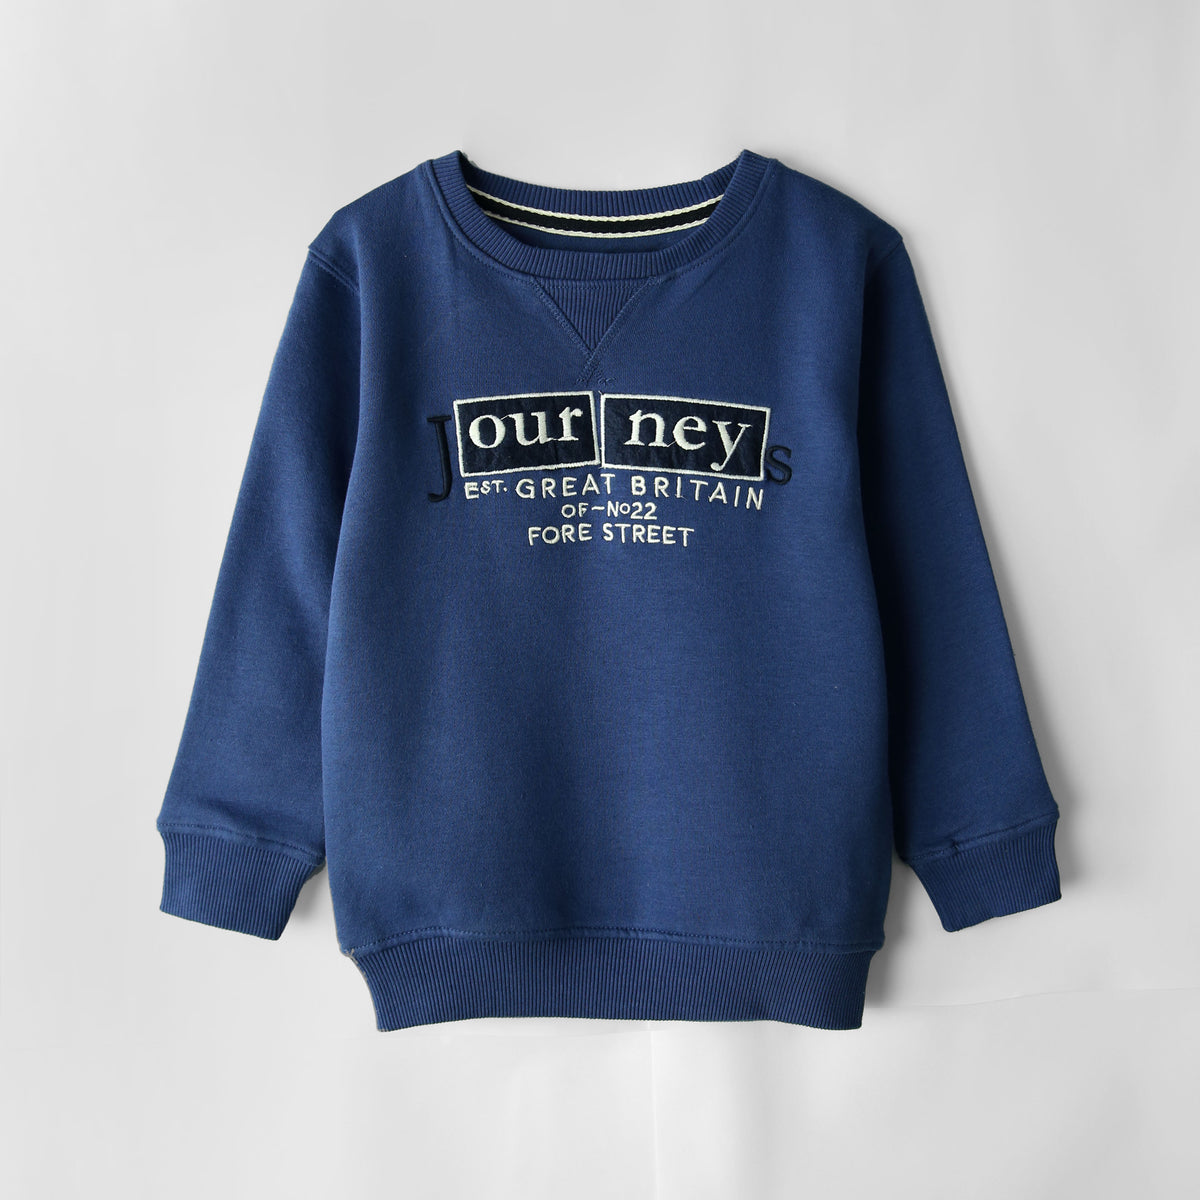 Premium Quality Embroidered Fleece Blue Sweatshirt For Kids